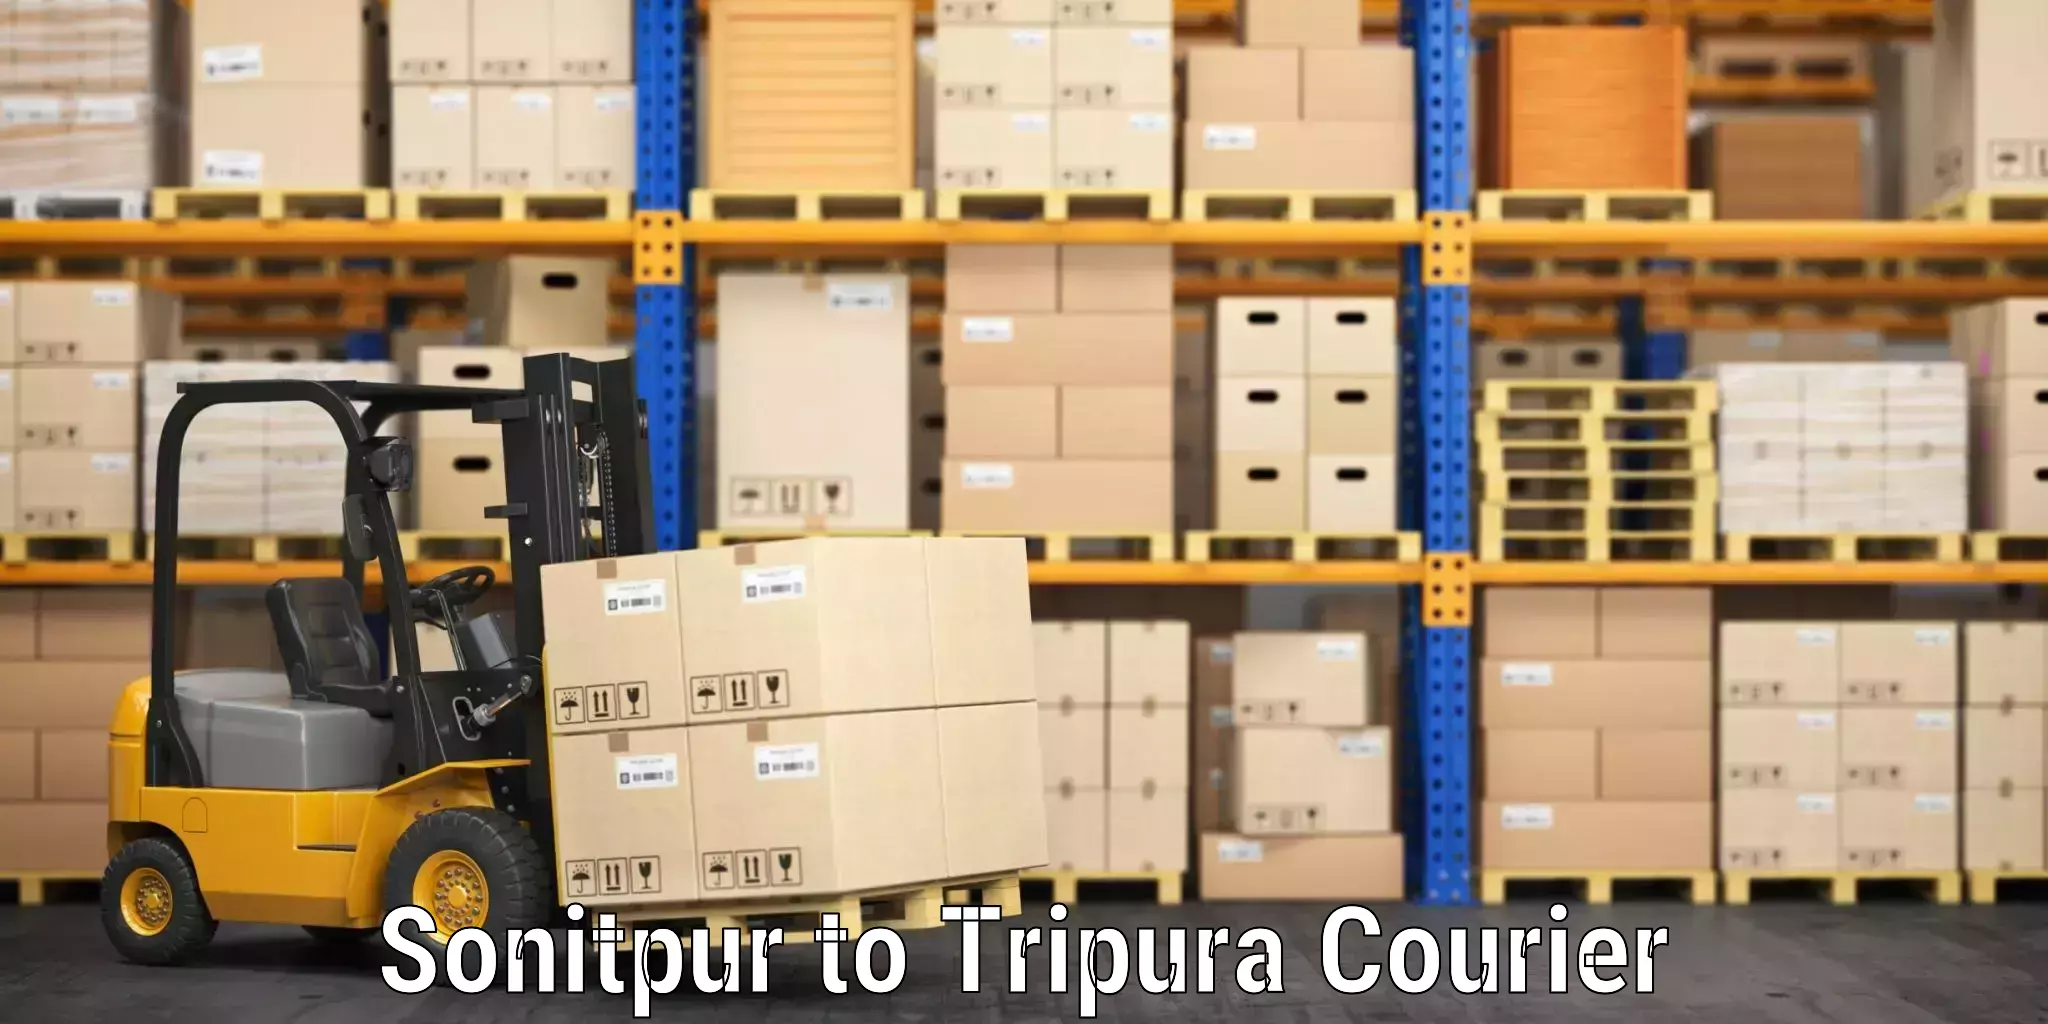 Luggage shipment processing Sonitpur to Agartala